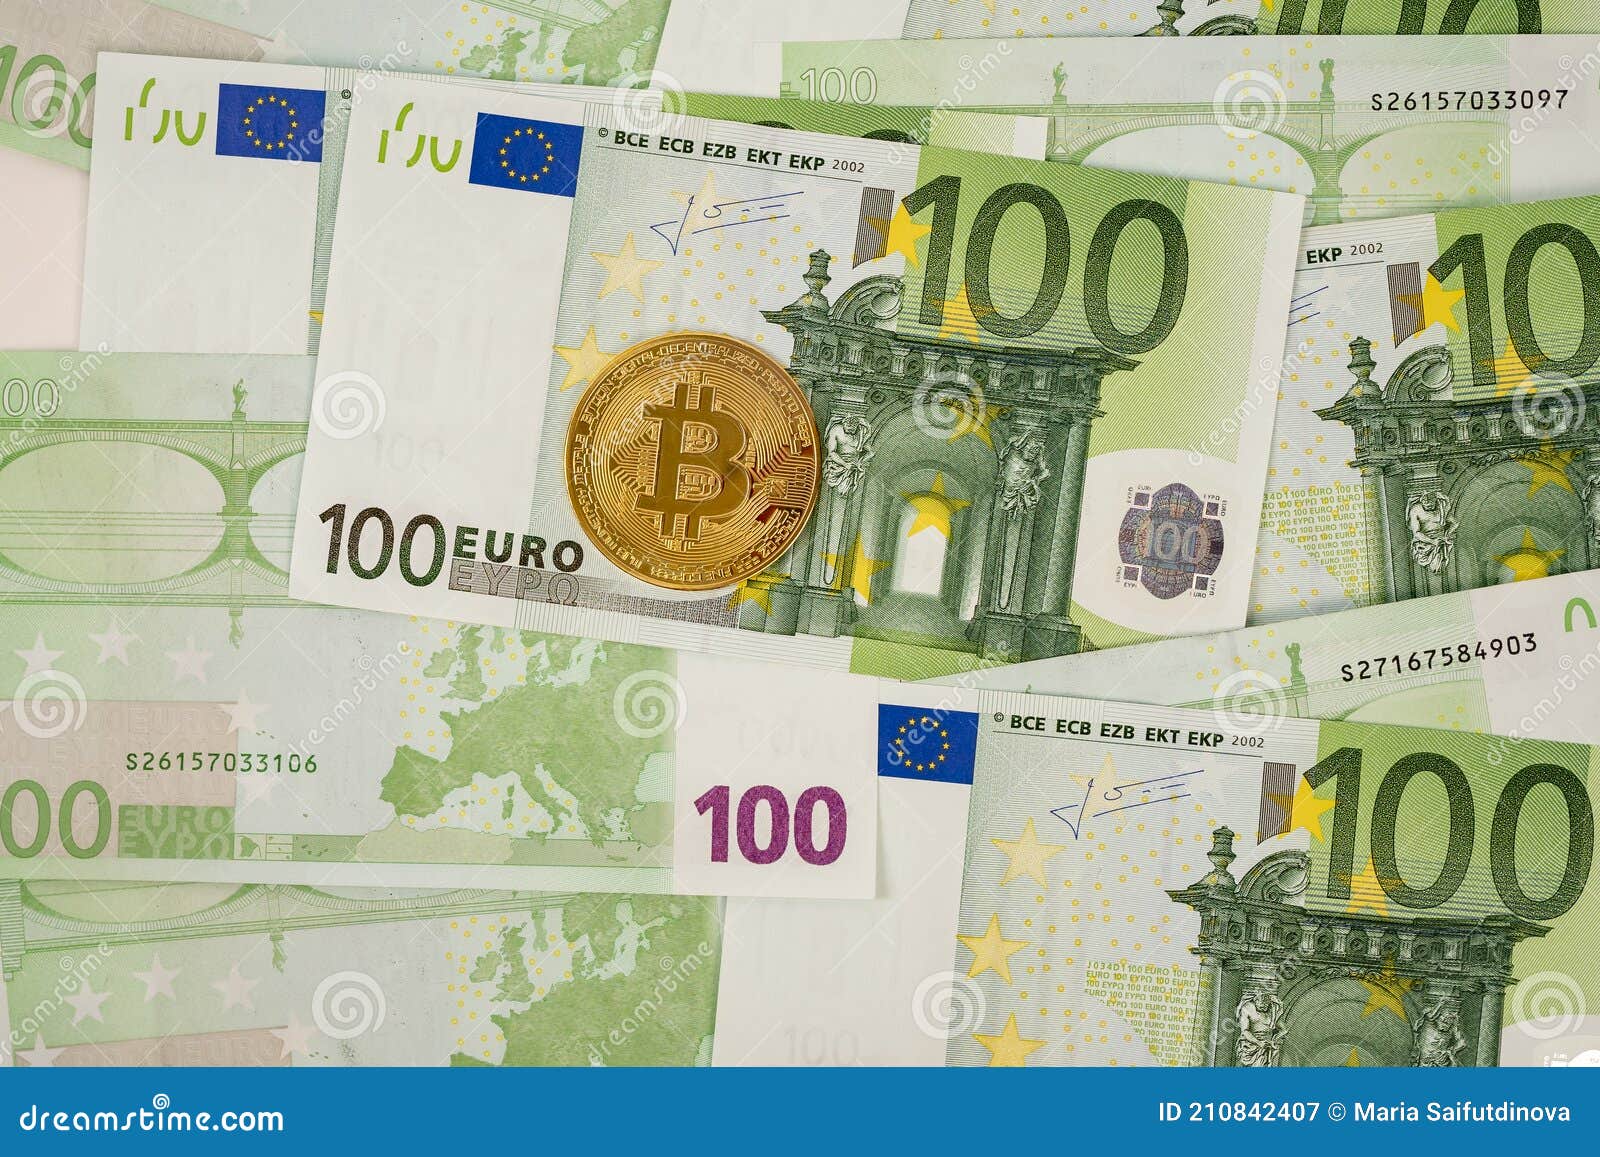 bitkoin euro investicija)